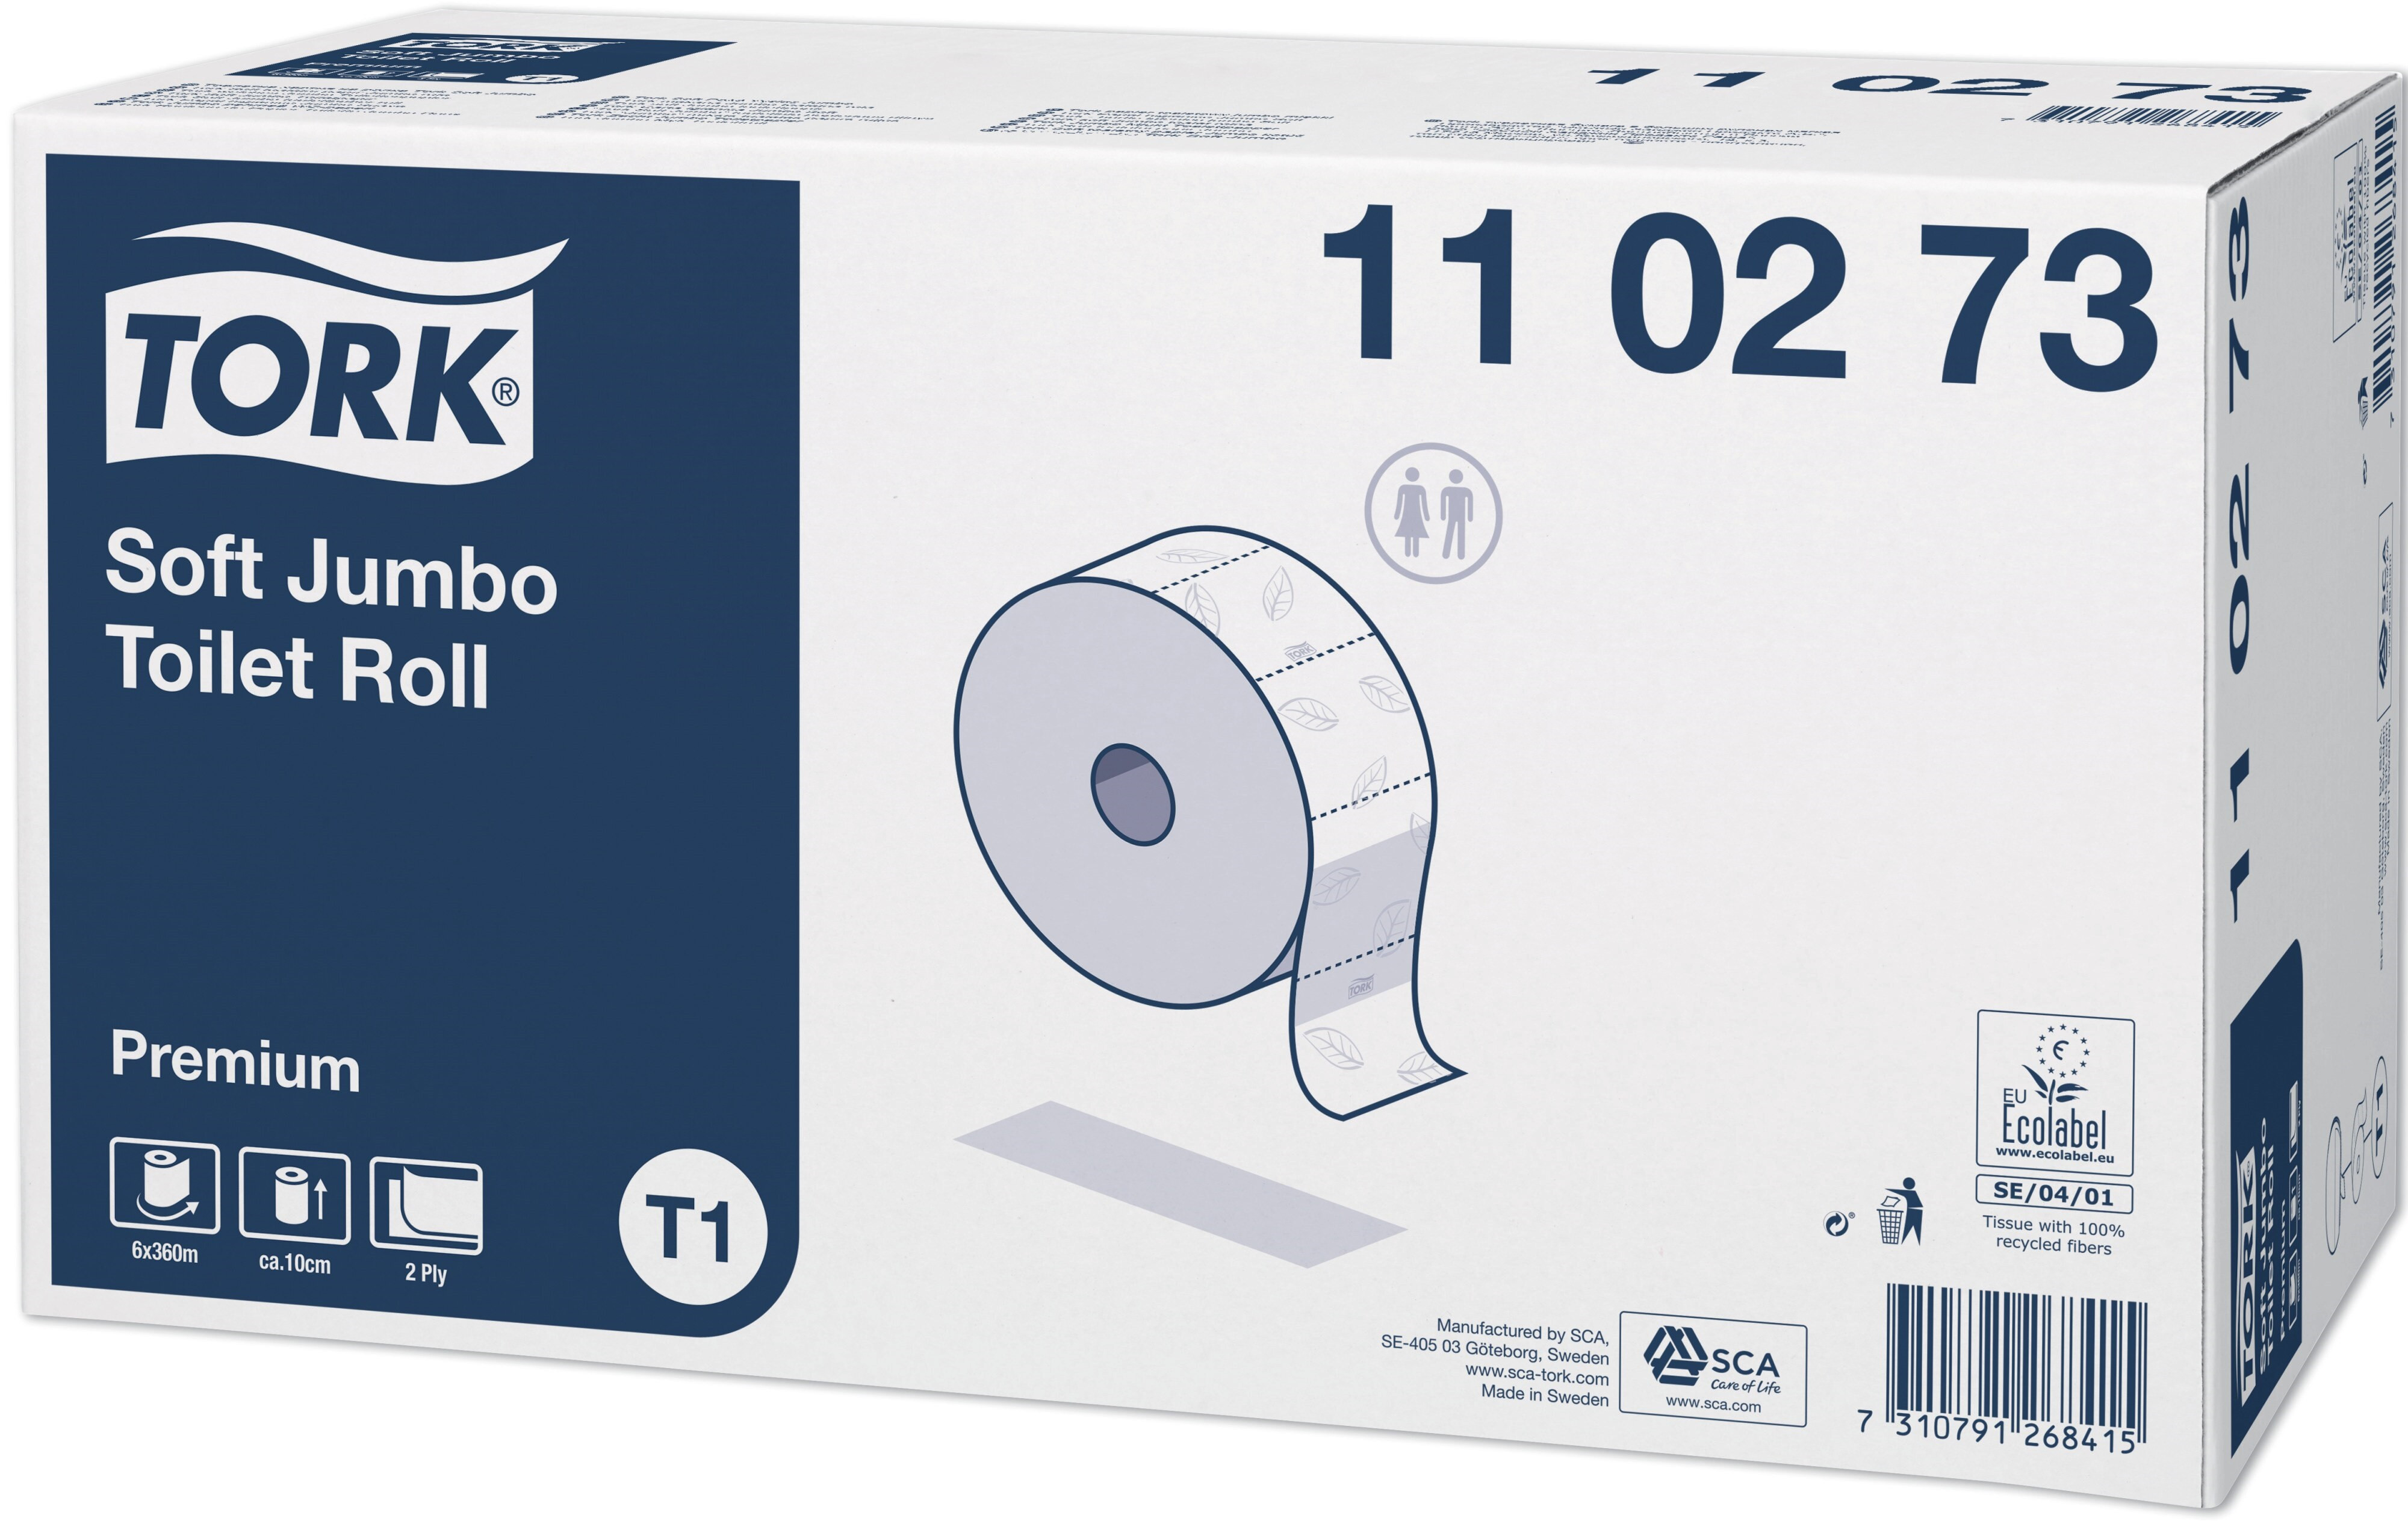 TORK Toiletpapir T1 Jumbo 2-lag P 230 m 6 rl Premium Hvid Ø26 cm (110273)